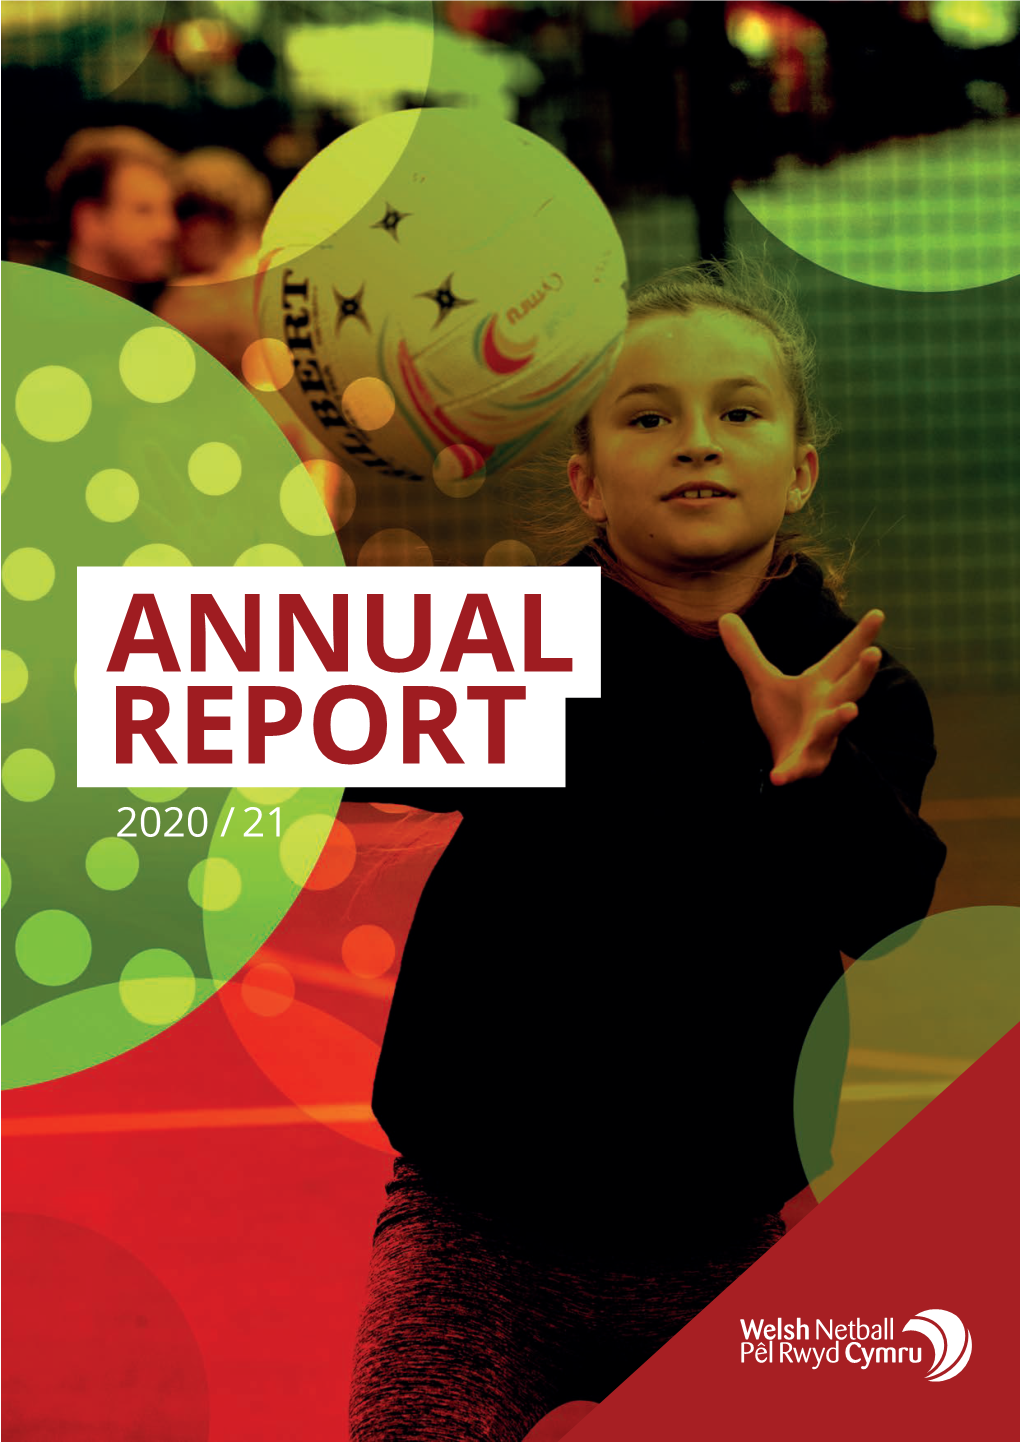 Annual Report 2020/21